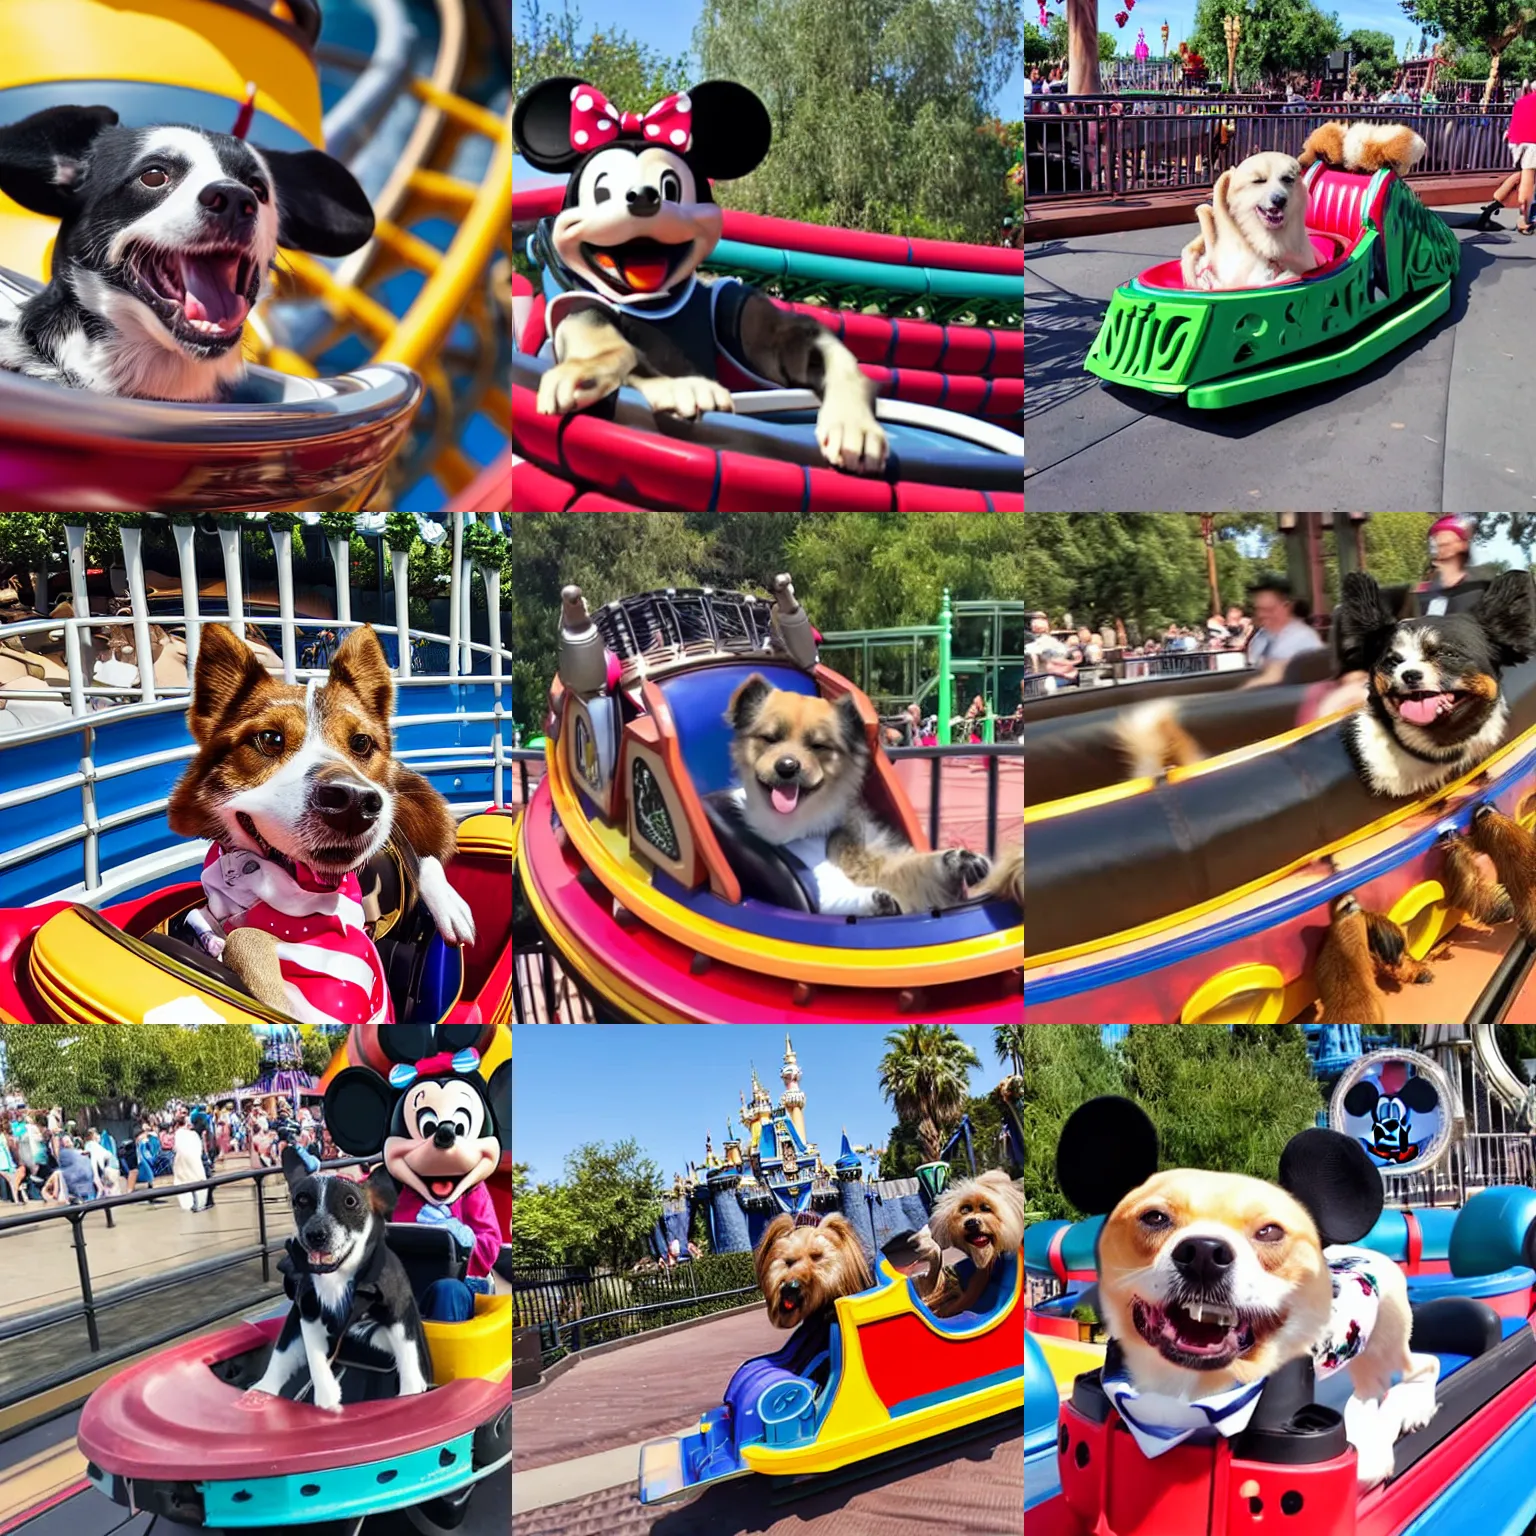 Prompt: a dog enjoying a rollercoaster ride at disneyland